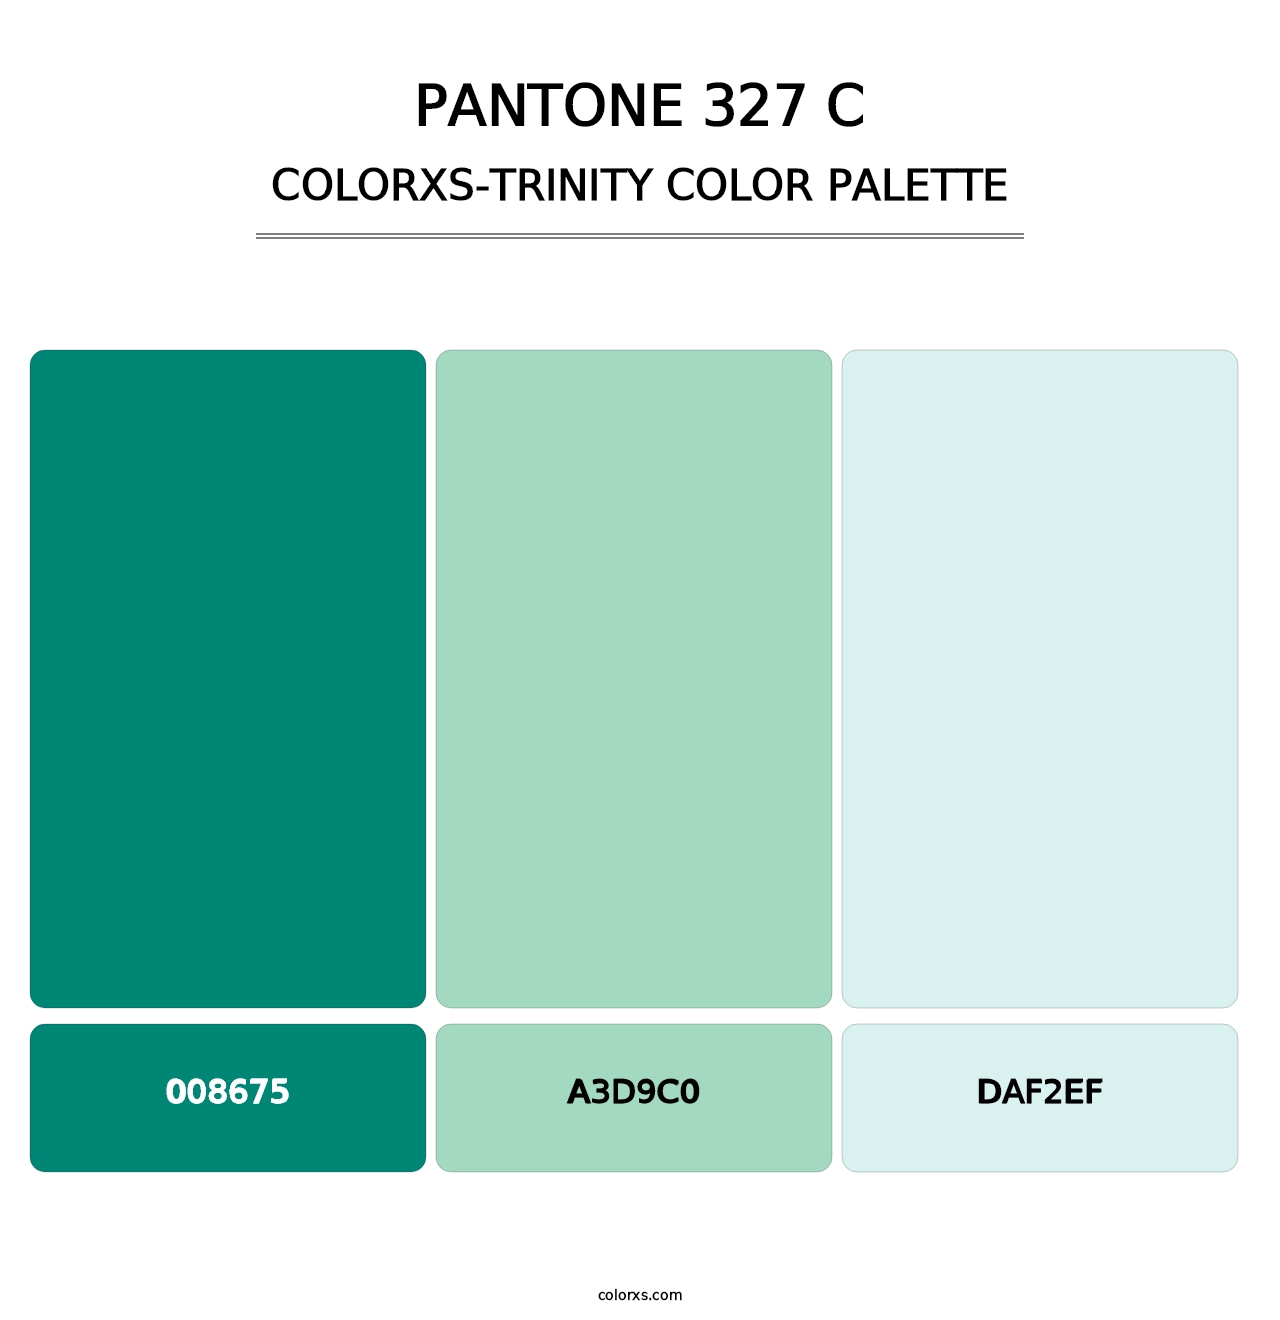 PANTONE 327 C - Colorxs Trinity Palette